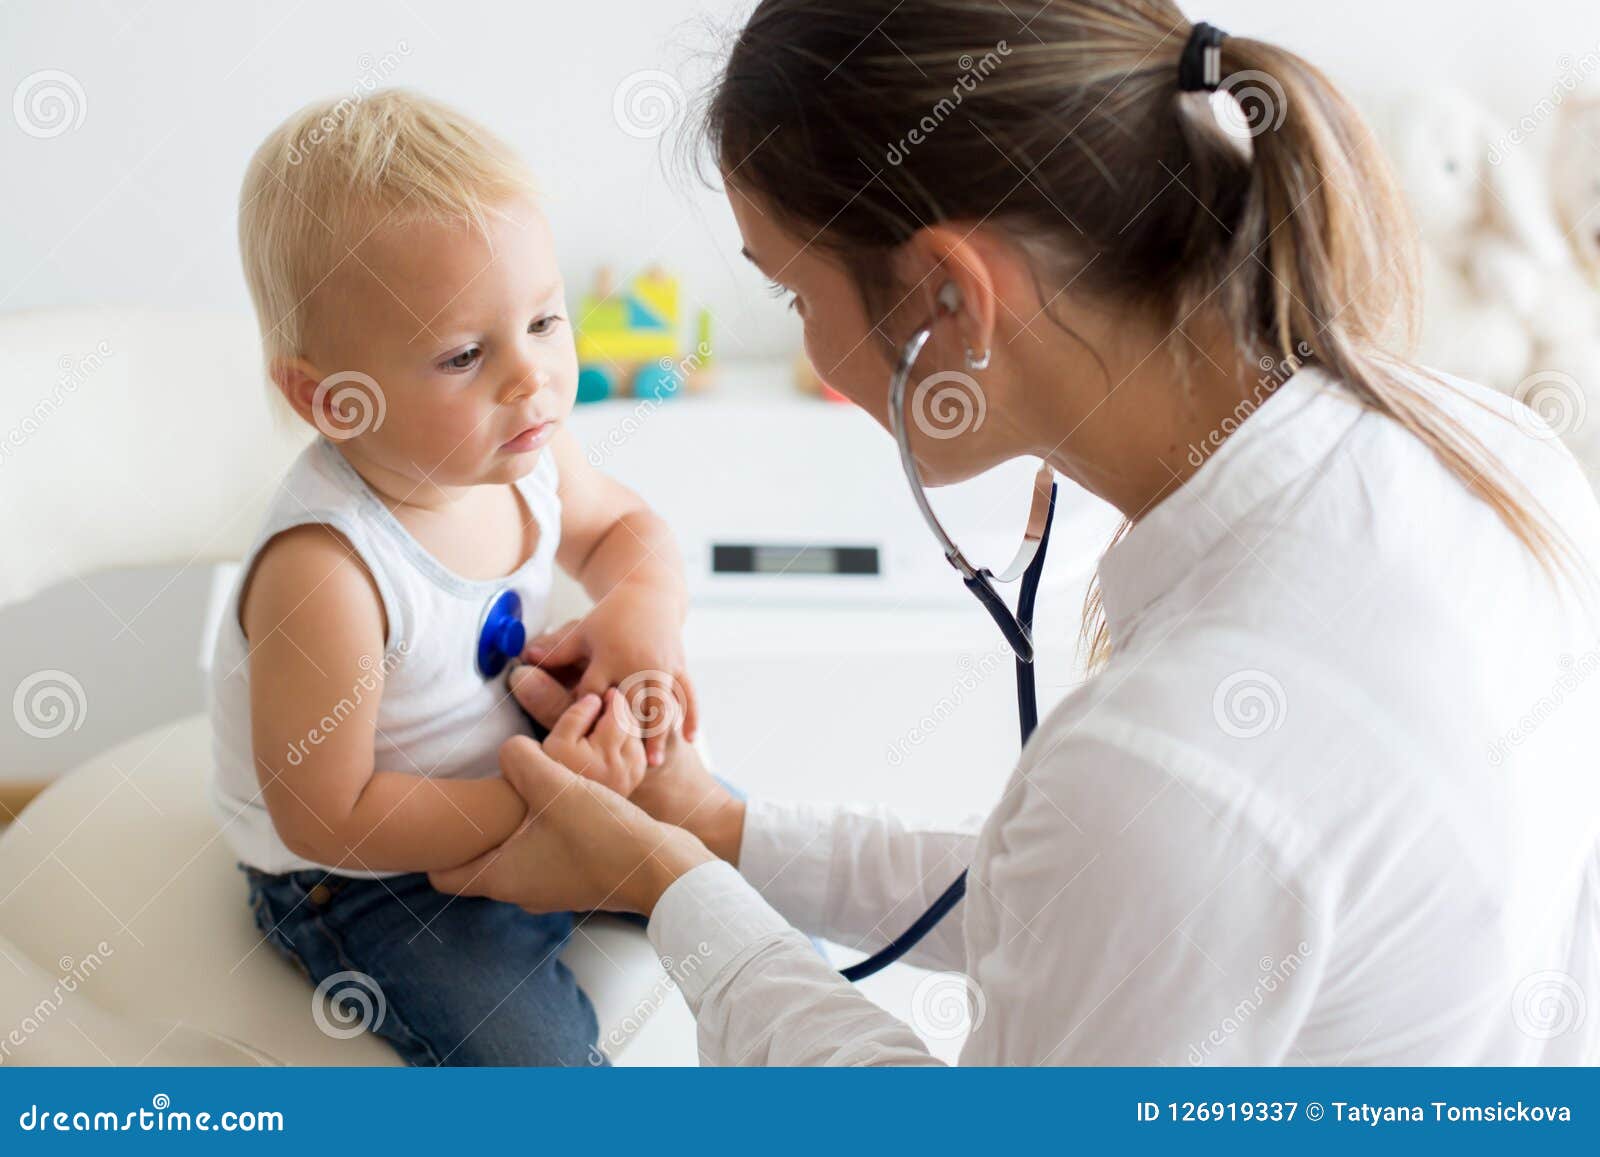 pediatrician examining baby boy. doctor using stethoscope to listen to kid